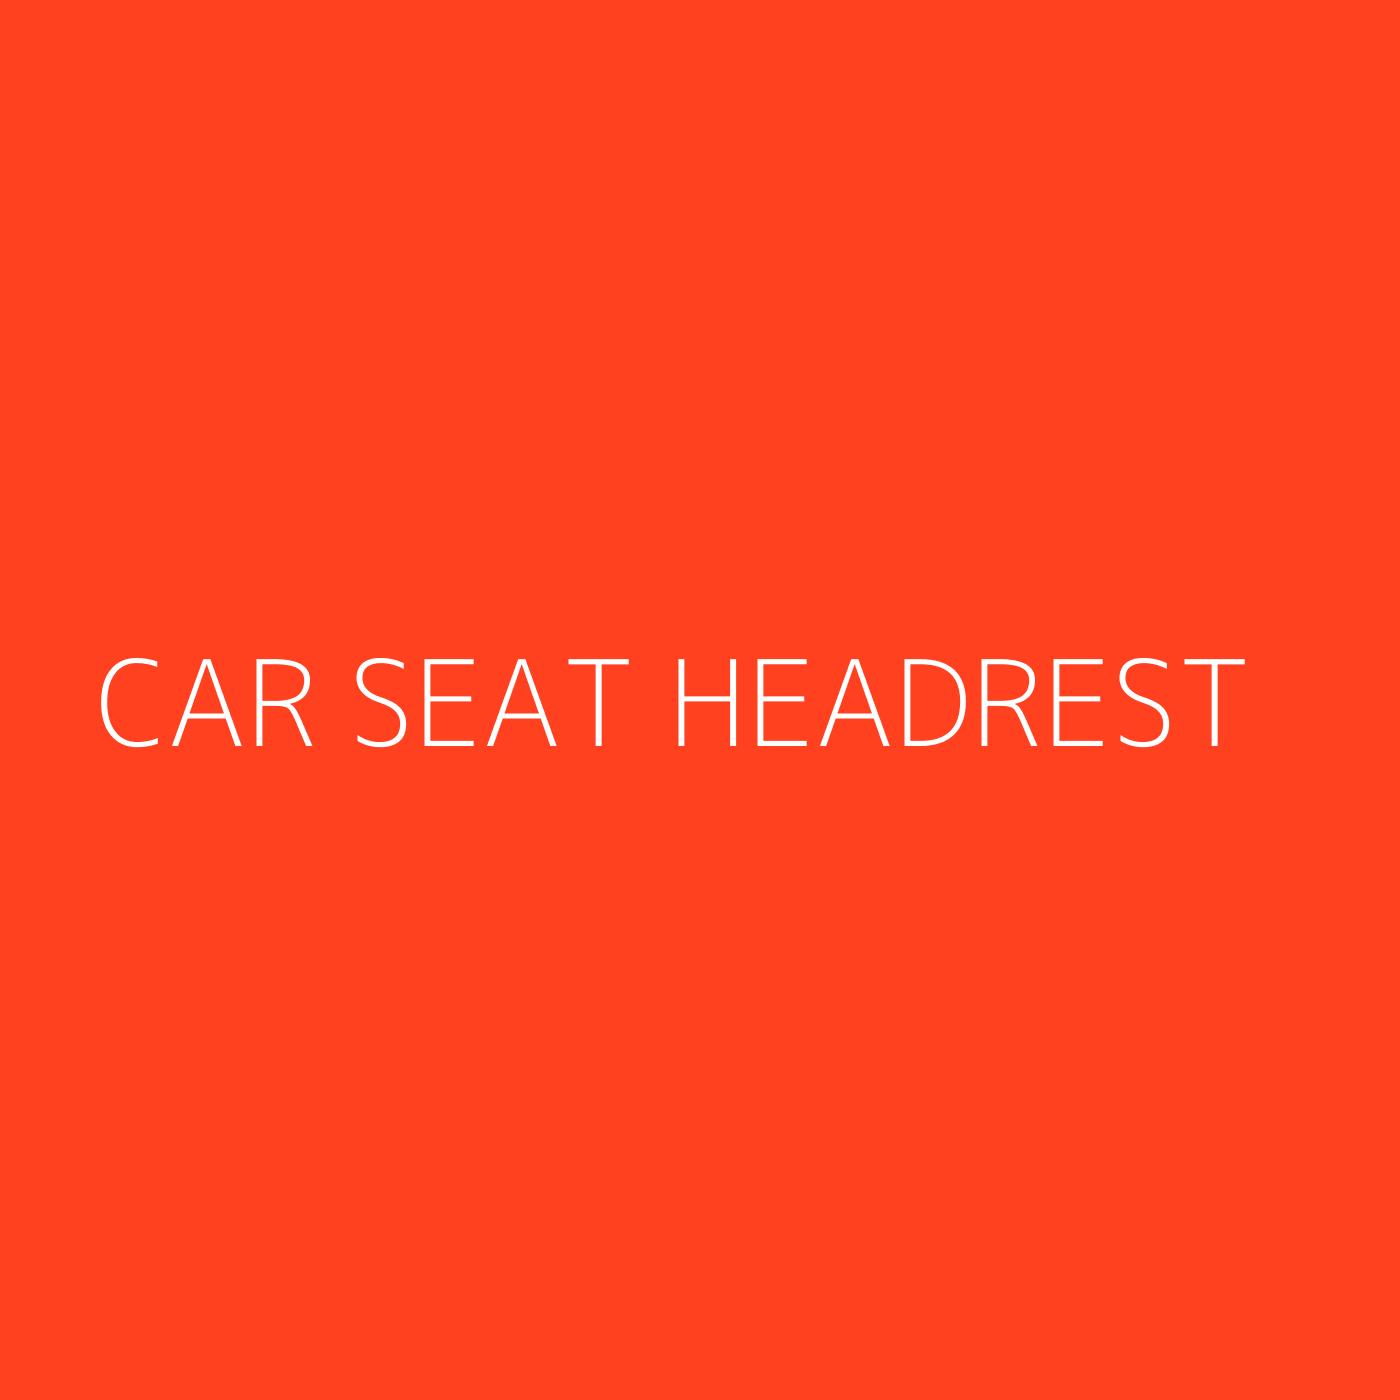 Car Seat Headrest Playlist Artwork